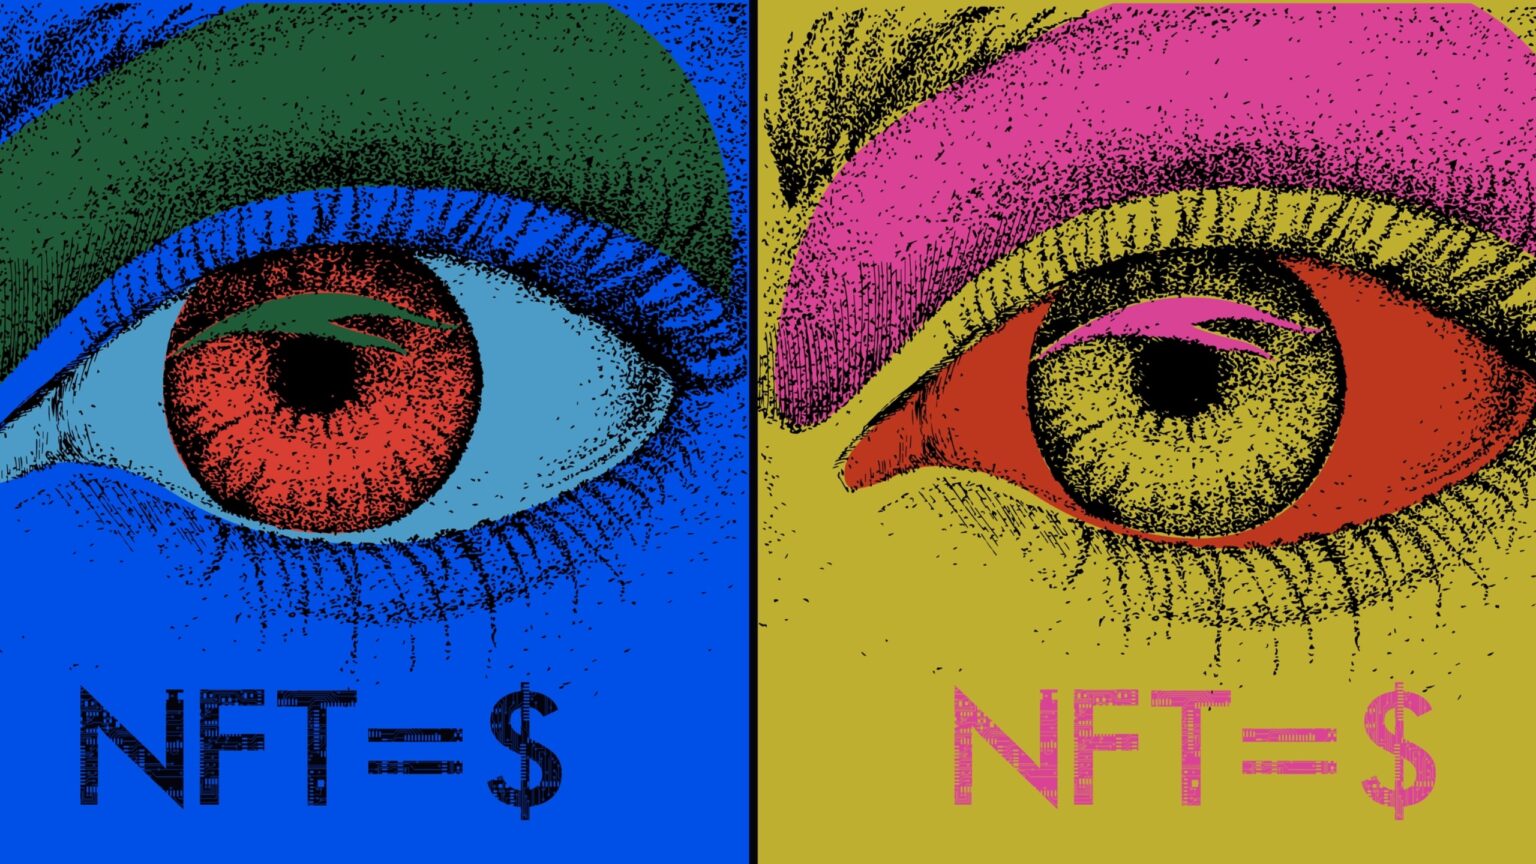 NFT Trademark Filings Soar More than 20,000%